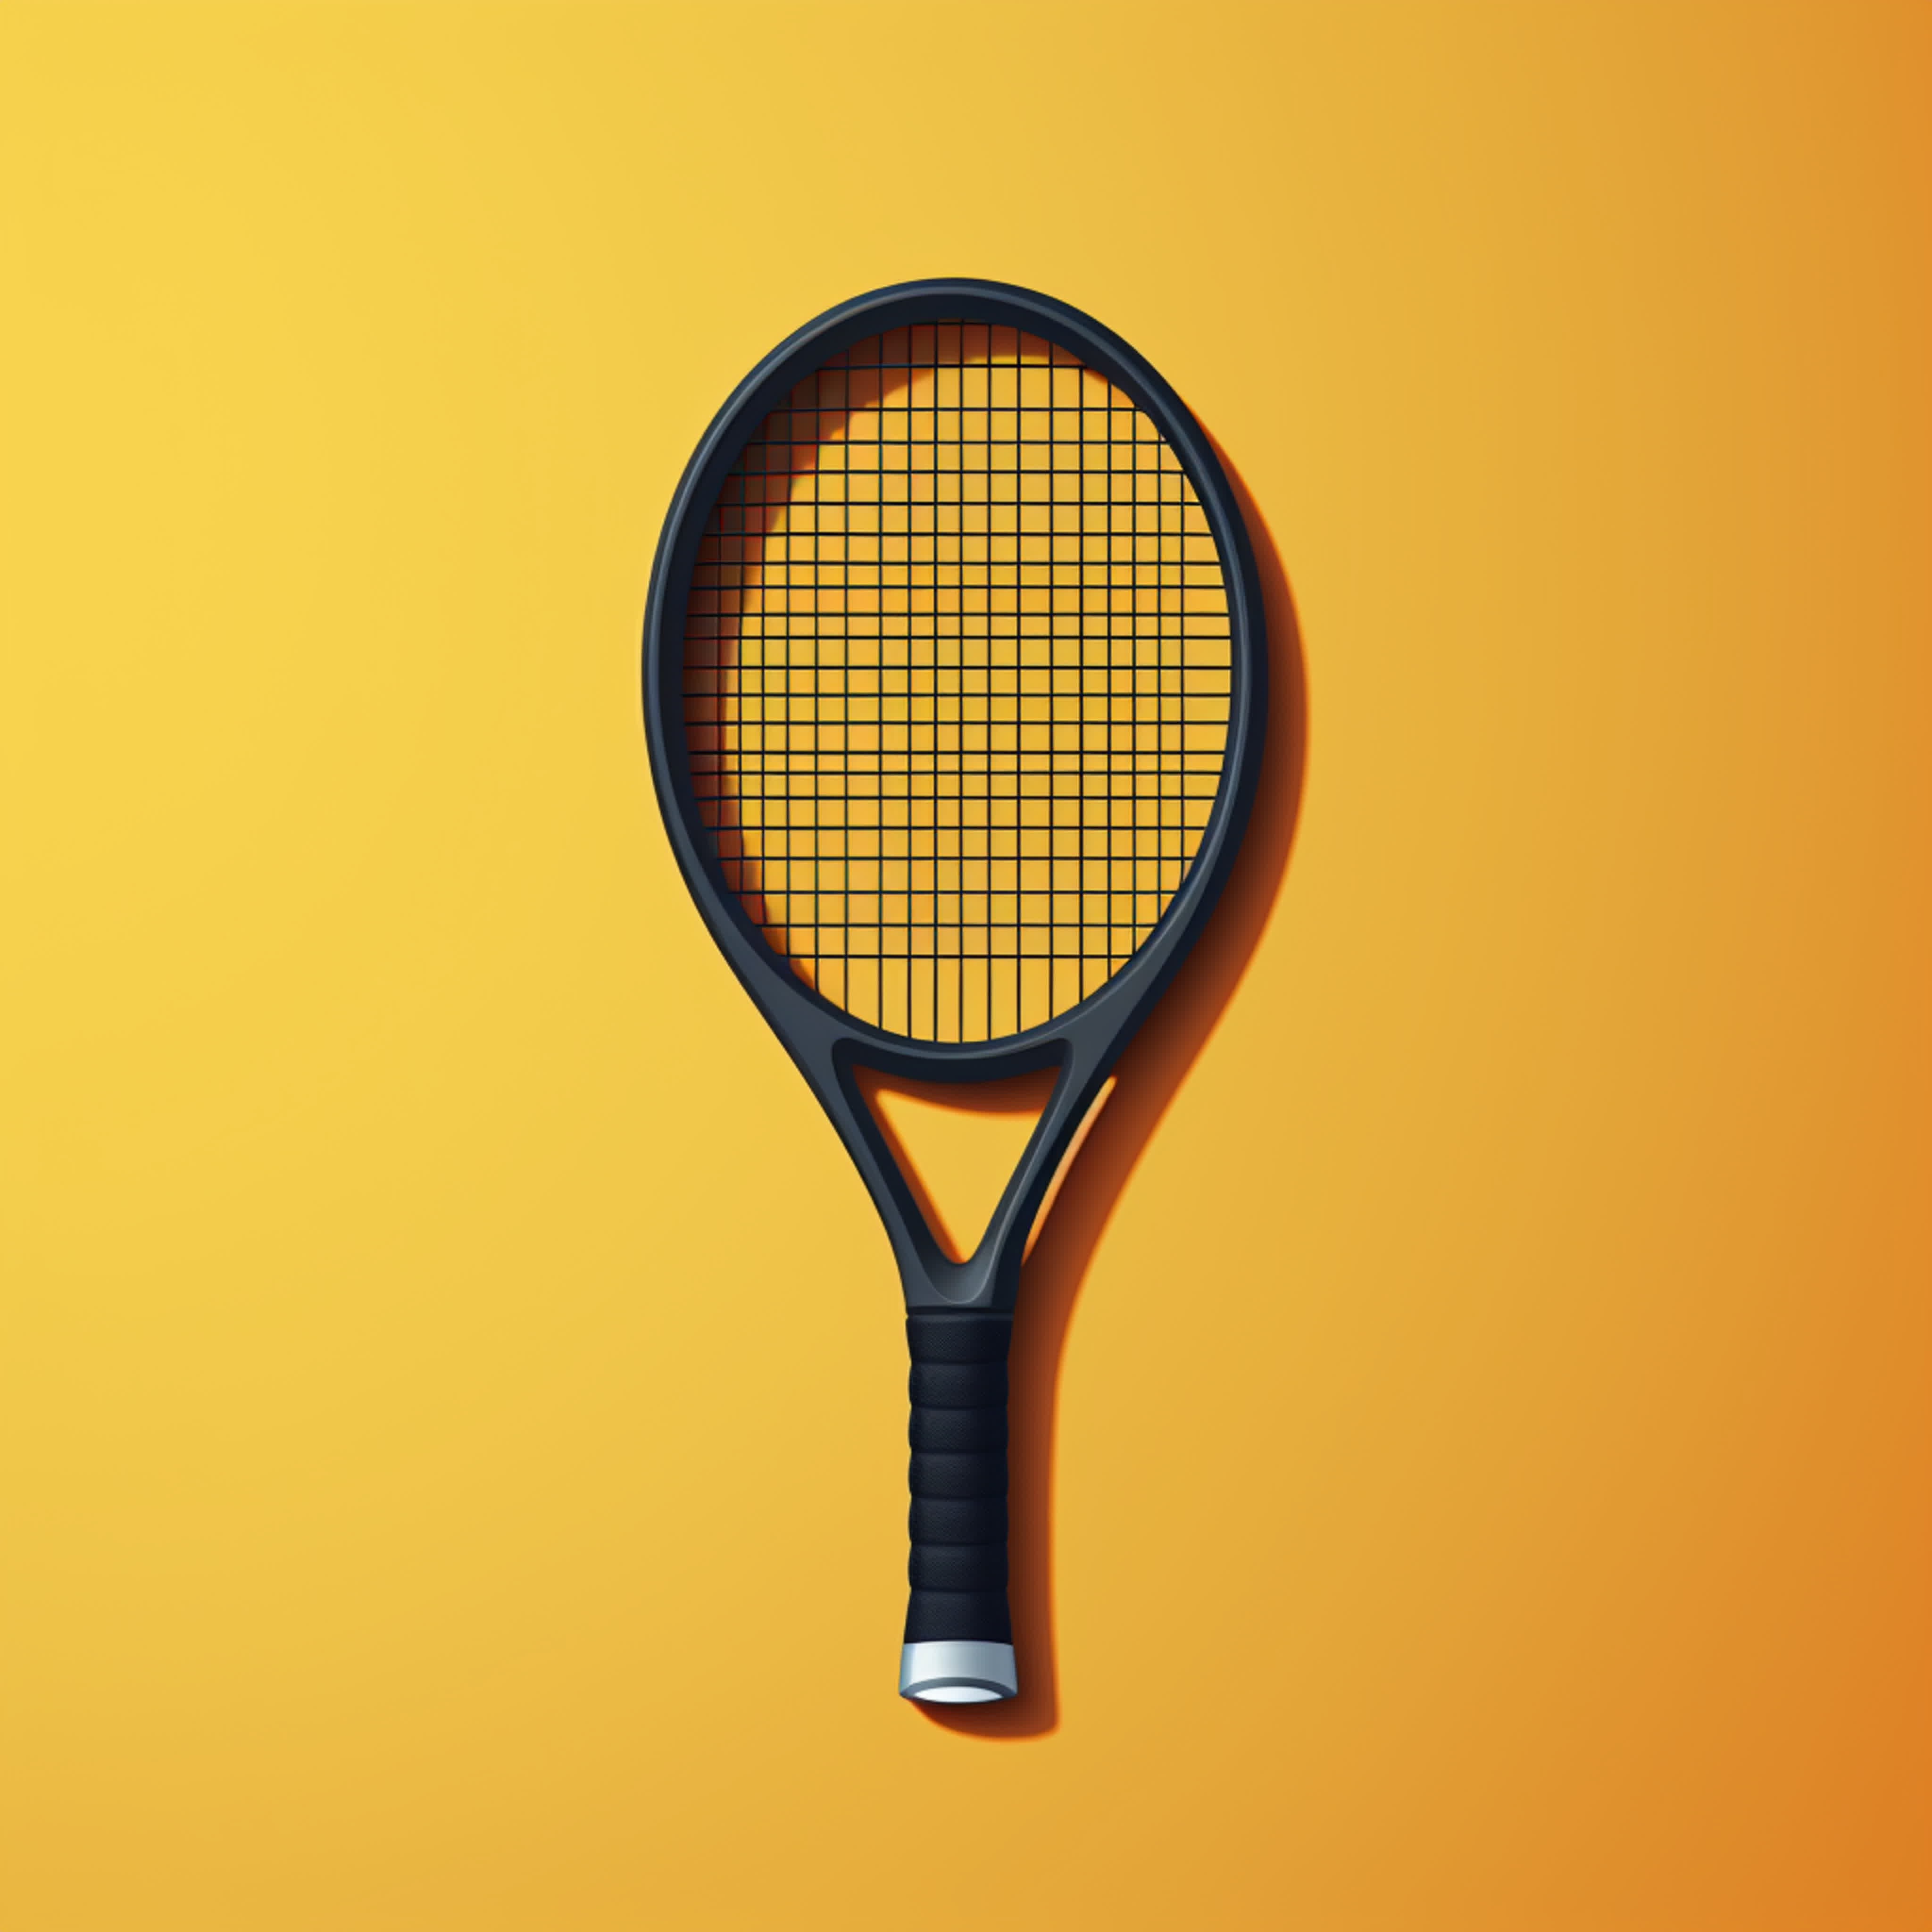 v3ri4 m4i m41nd minimalistic 2d tennis racket icon 38976ee3 bb2e 4554 83f9 b70c8480180d 884